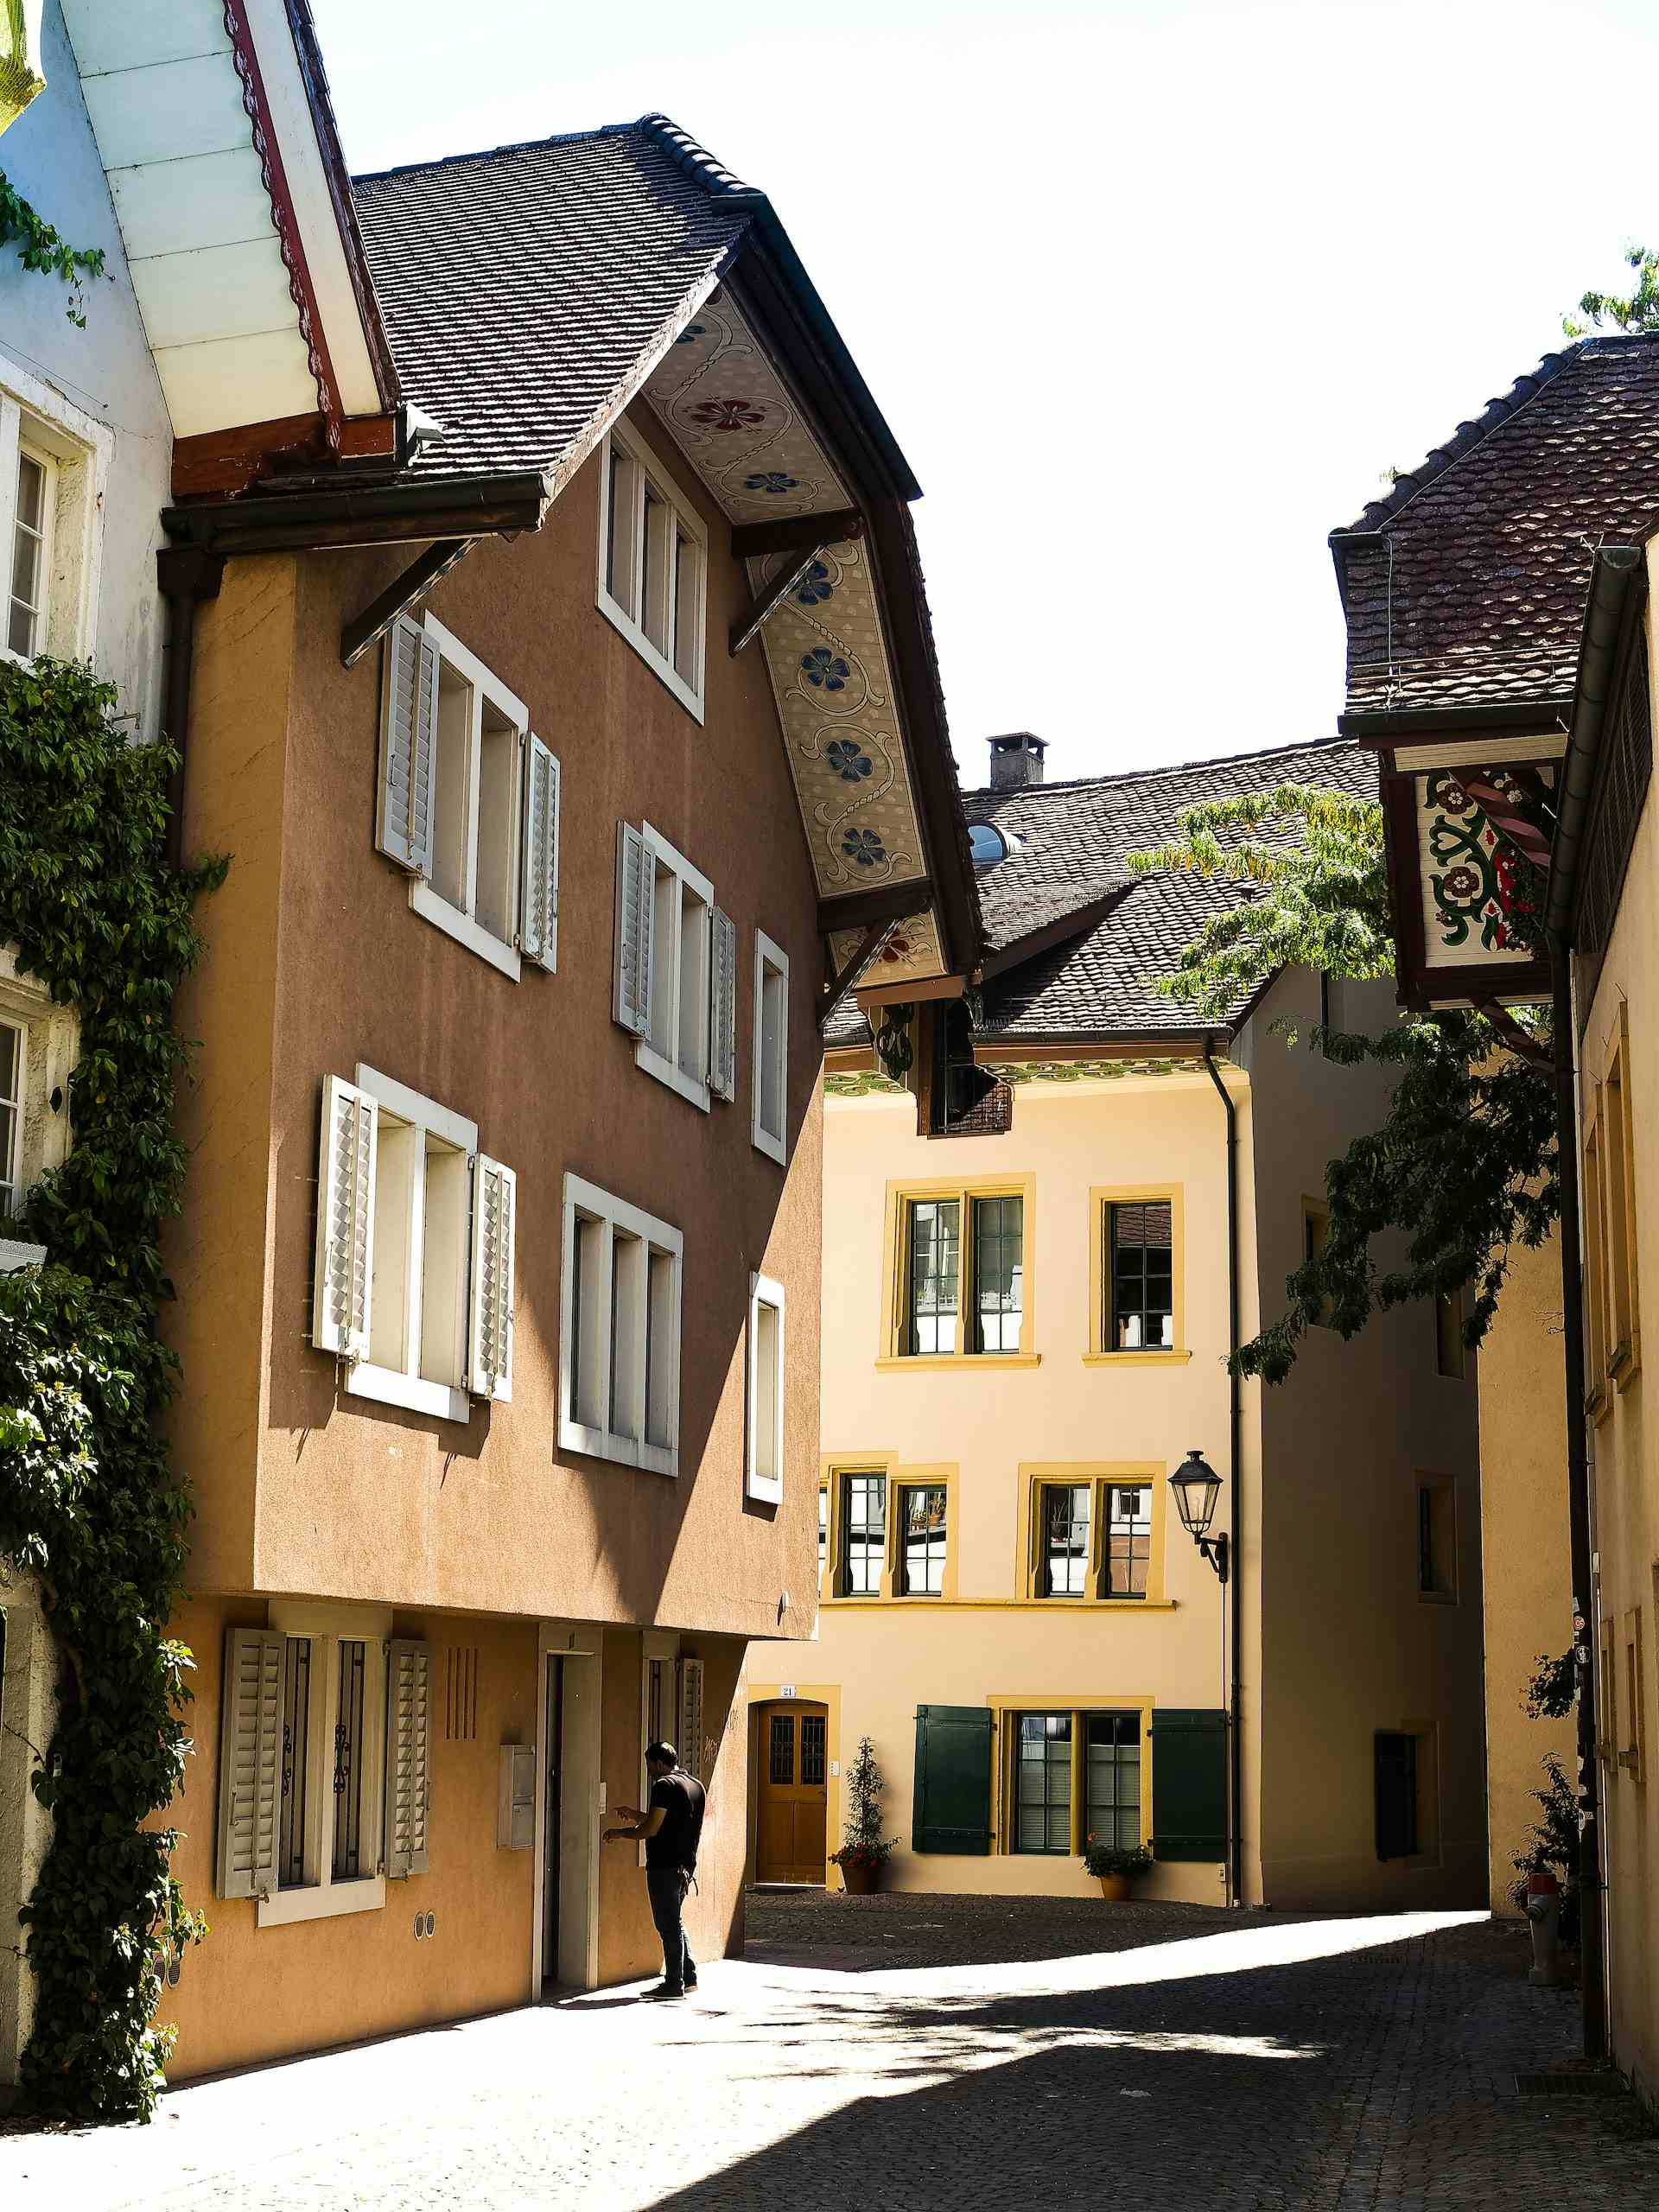 Eulenhof , producer in Möhlin canton of Aargau in Switzerland